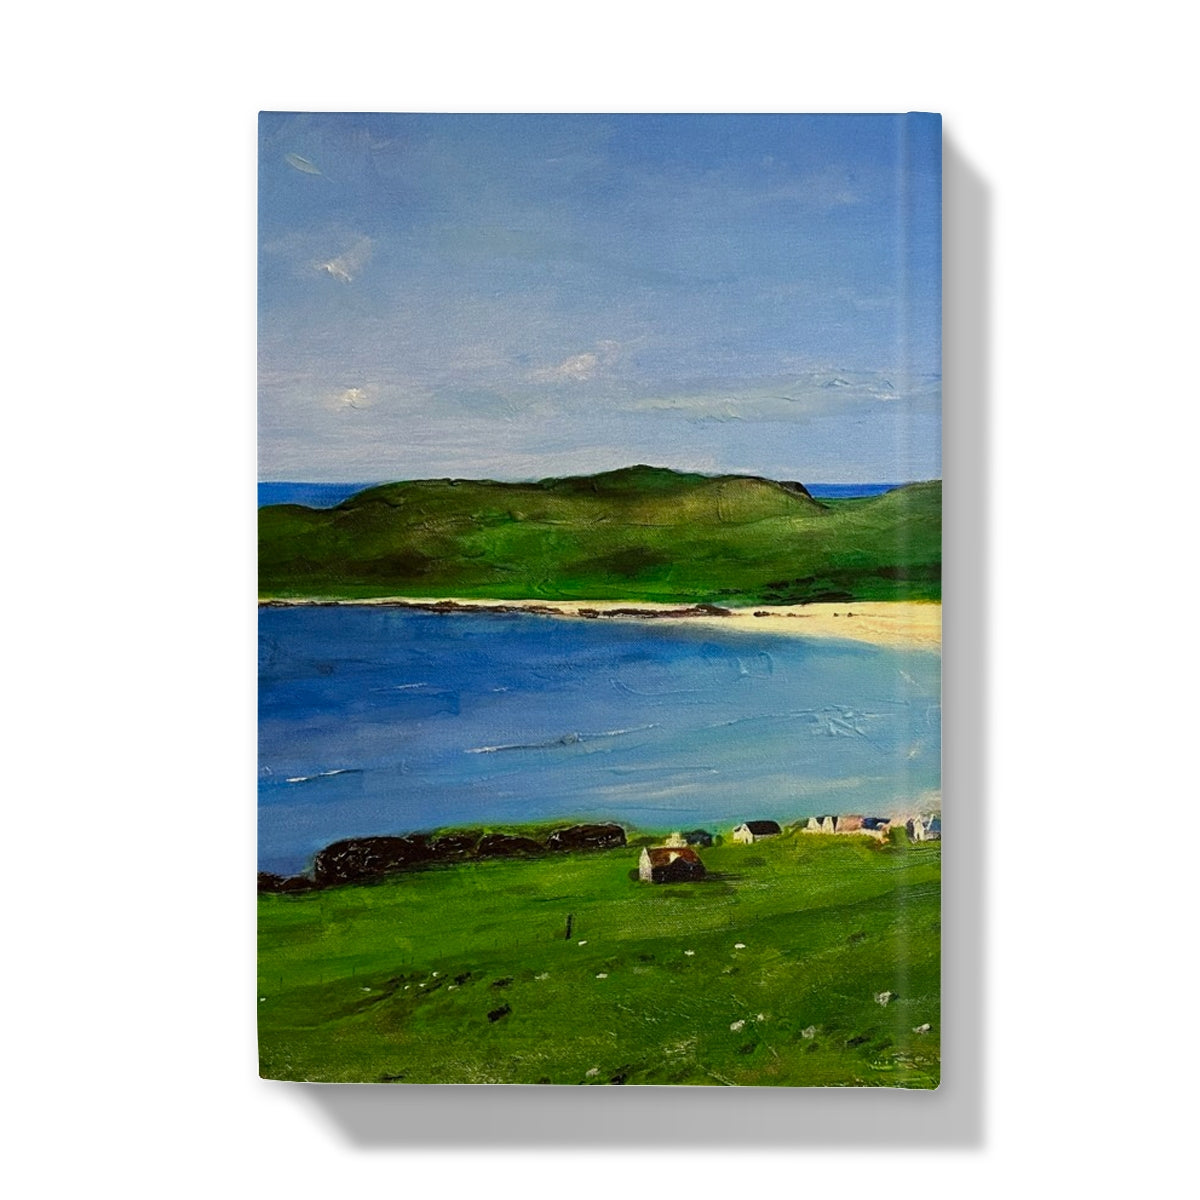 Balephuil Beach Tiree Art Gifts Hardback Journal-Journals & Notebooks-Hebridean Islands Art Gallery-Paintings, Prints, Homeware, Art Gifts From Scotland By Scottish Artist Kevin Hunter